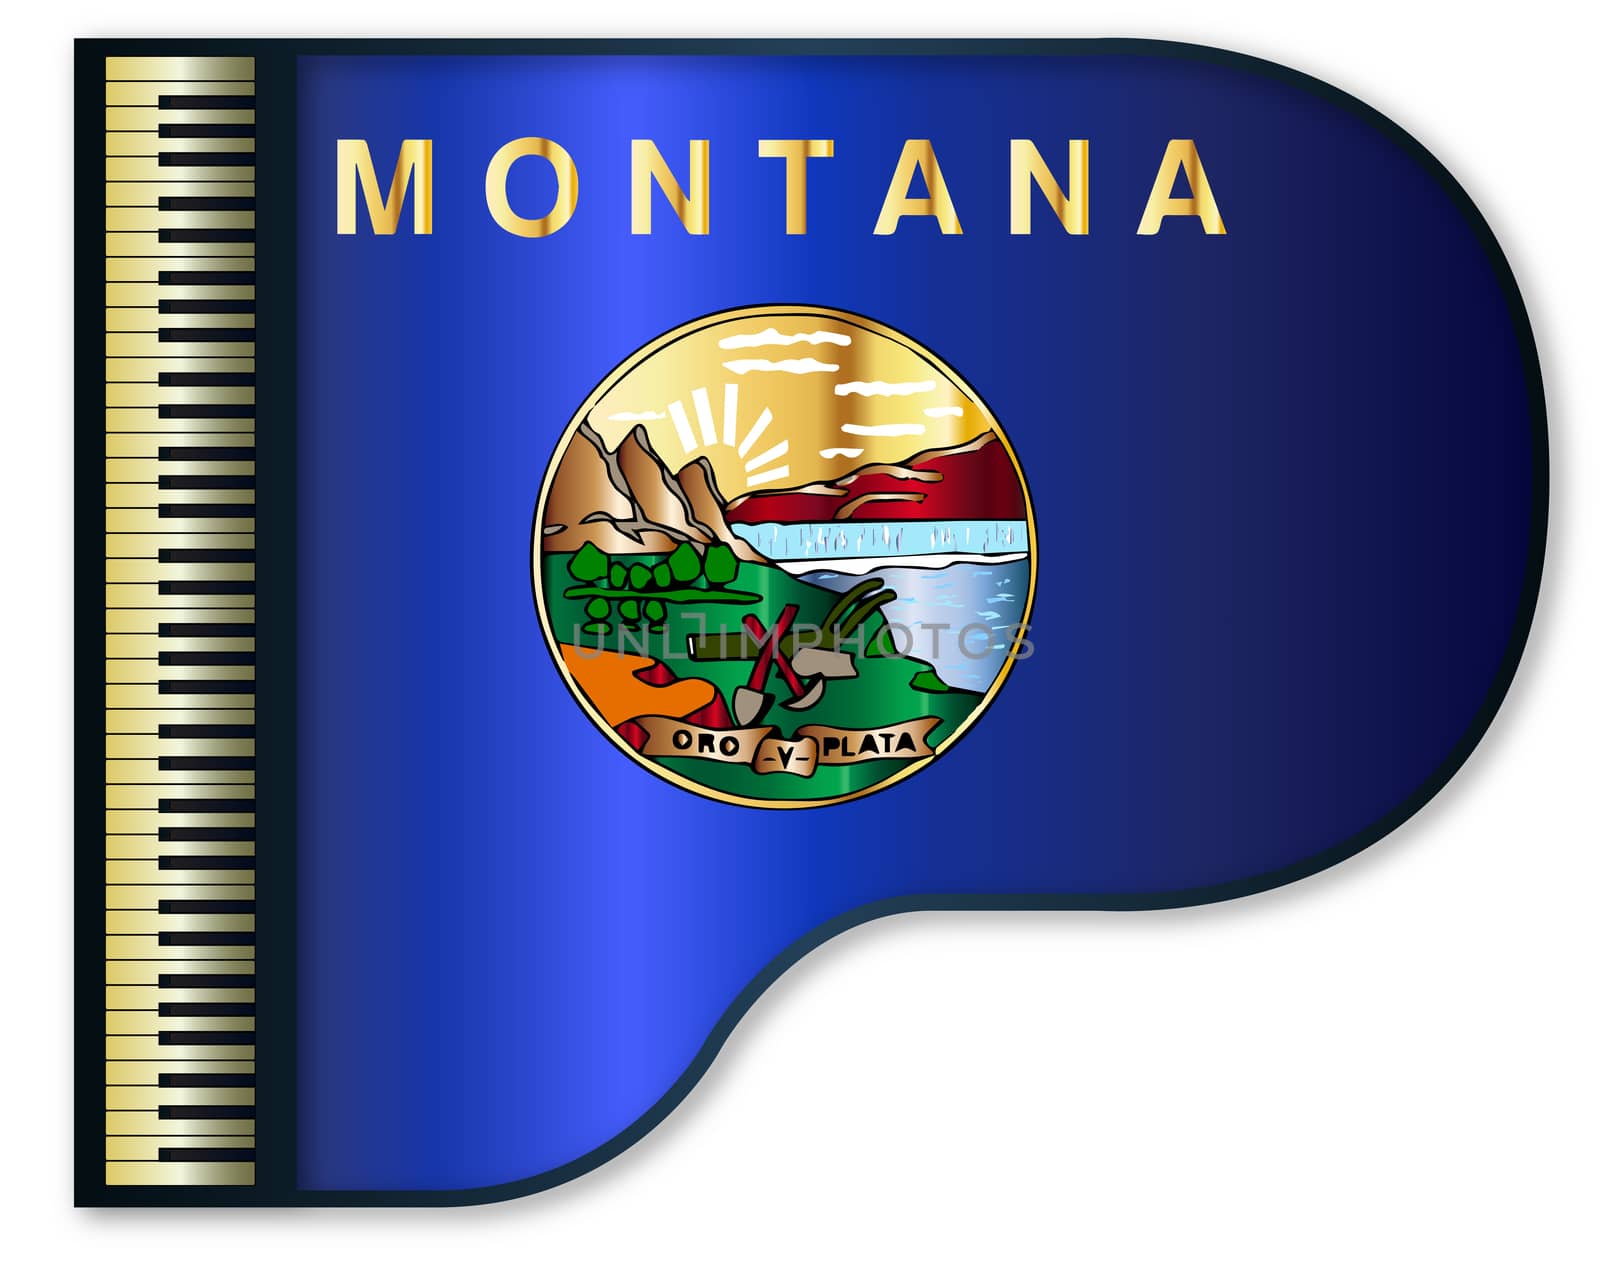 The Montana state flag set into a traditional black grand piano